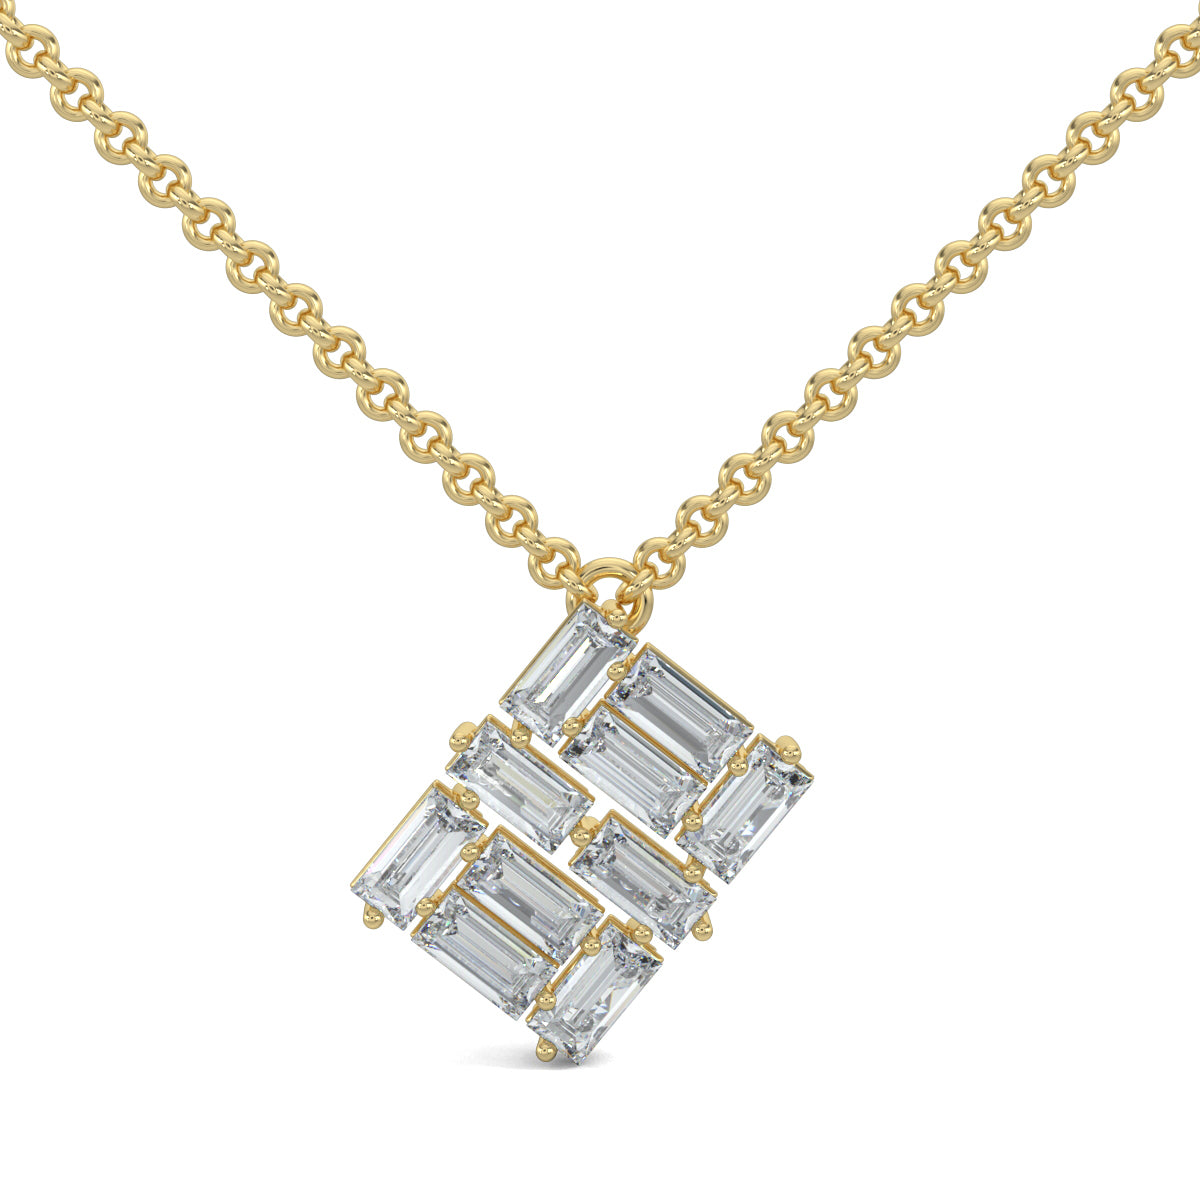 Yellow Gold, Diamond pendants, Astral Luxe Pendant, natural diamonds, lab-grown diamonds, rectangle pendant, casual jewelry, elegant pendant, diamond jewelry.